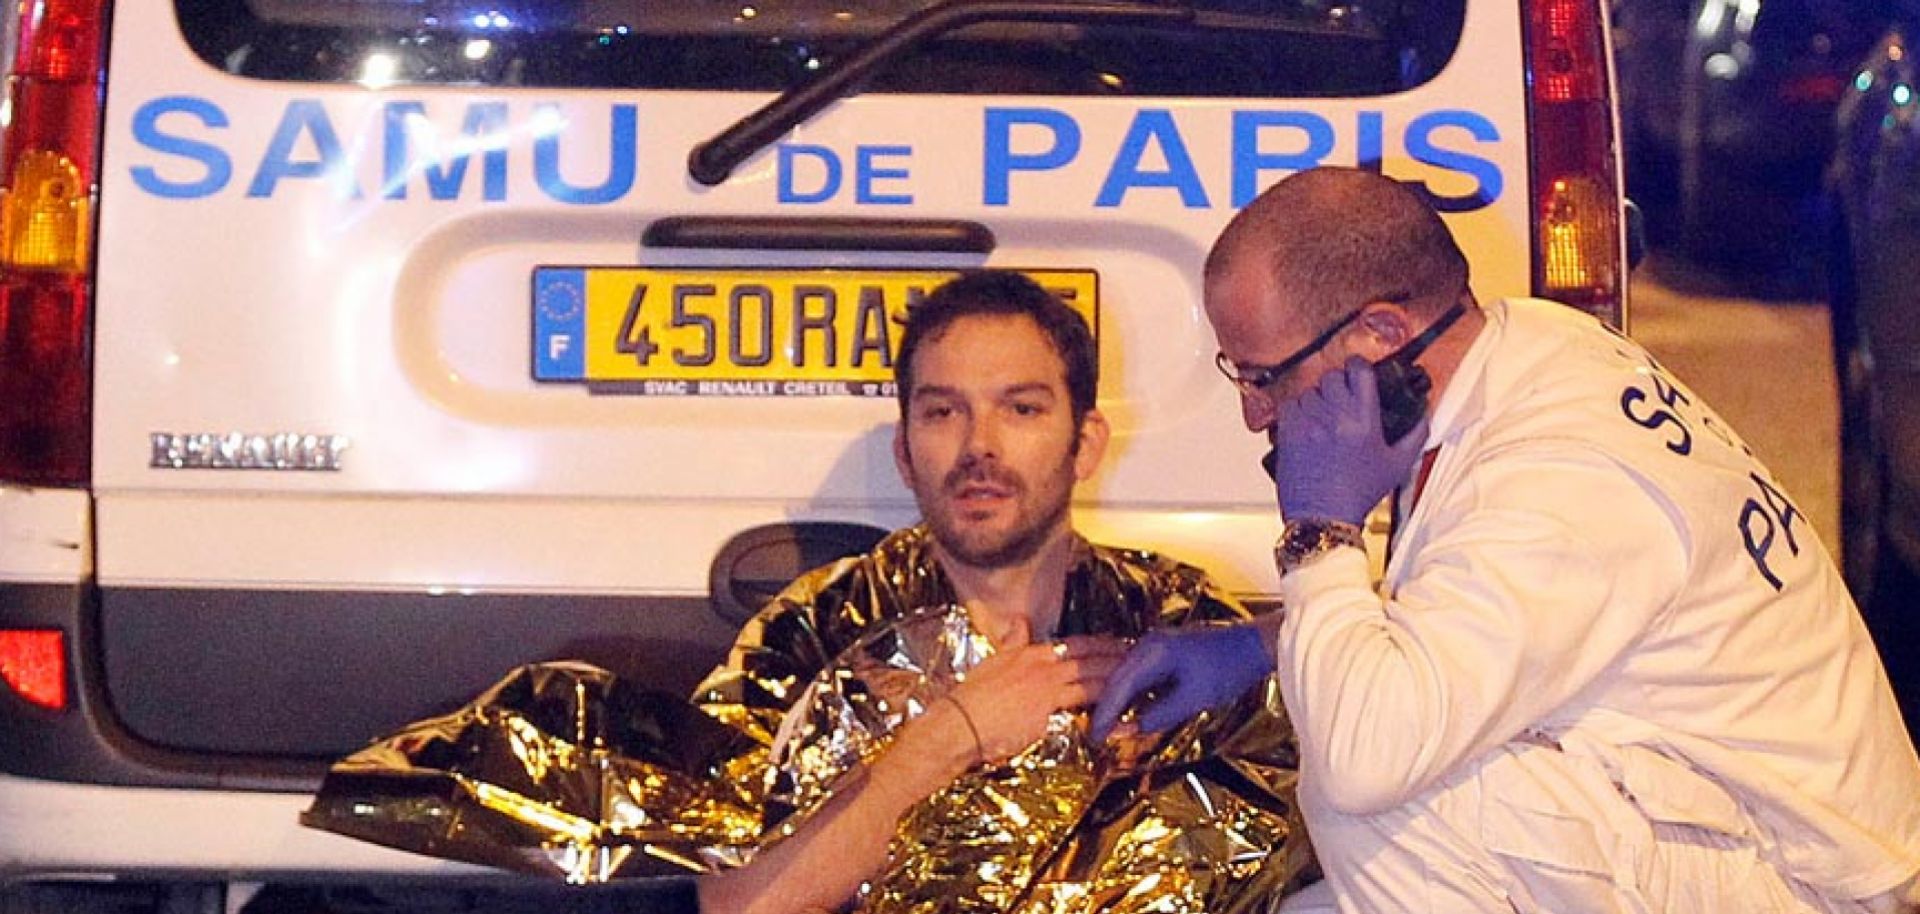 The Paris jihadist attacks on the Bataclan